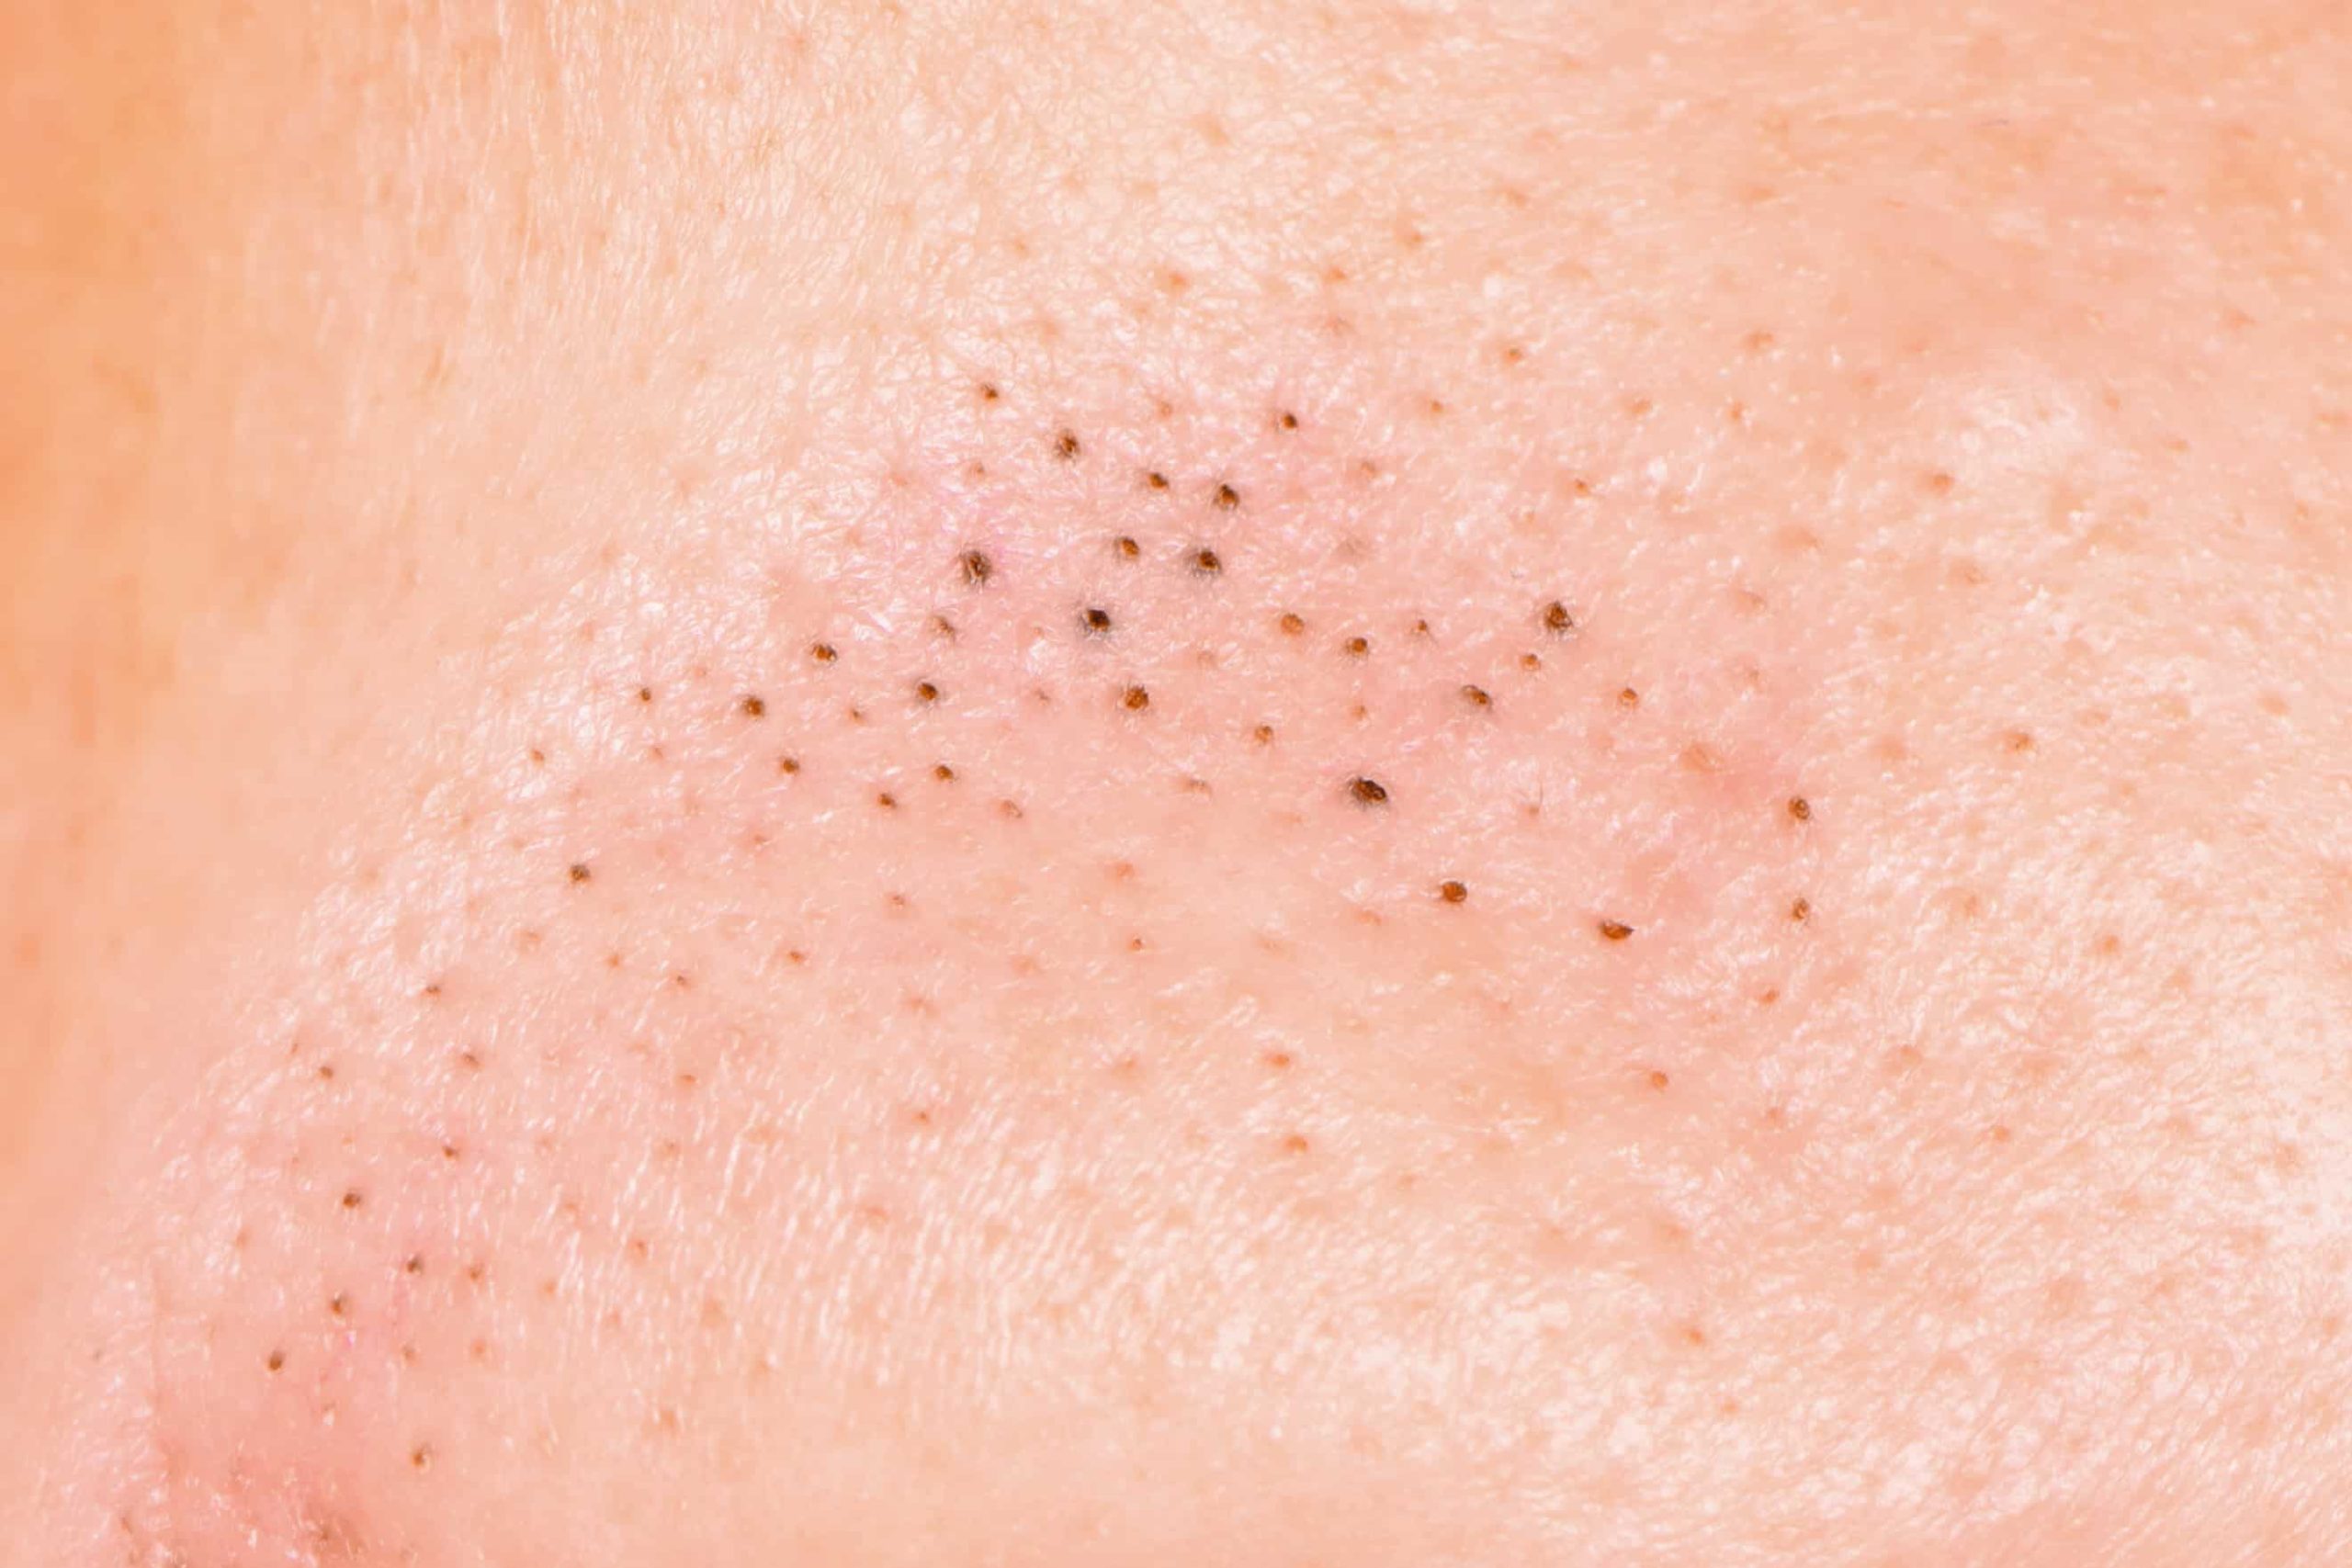 Blackheads appear as little black dots in the skin